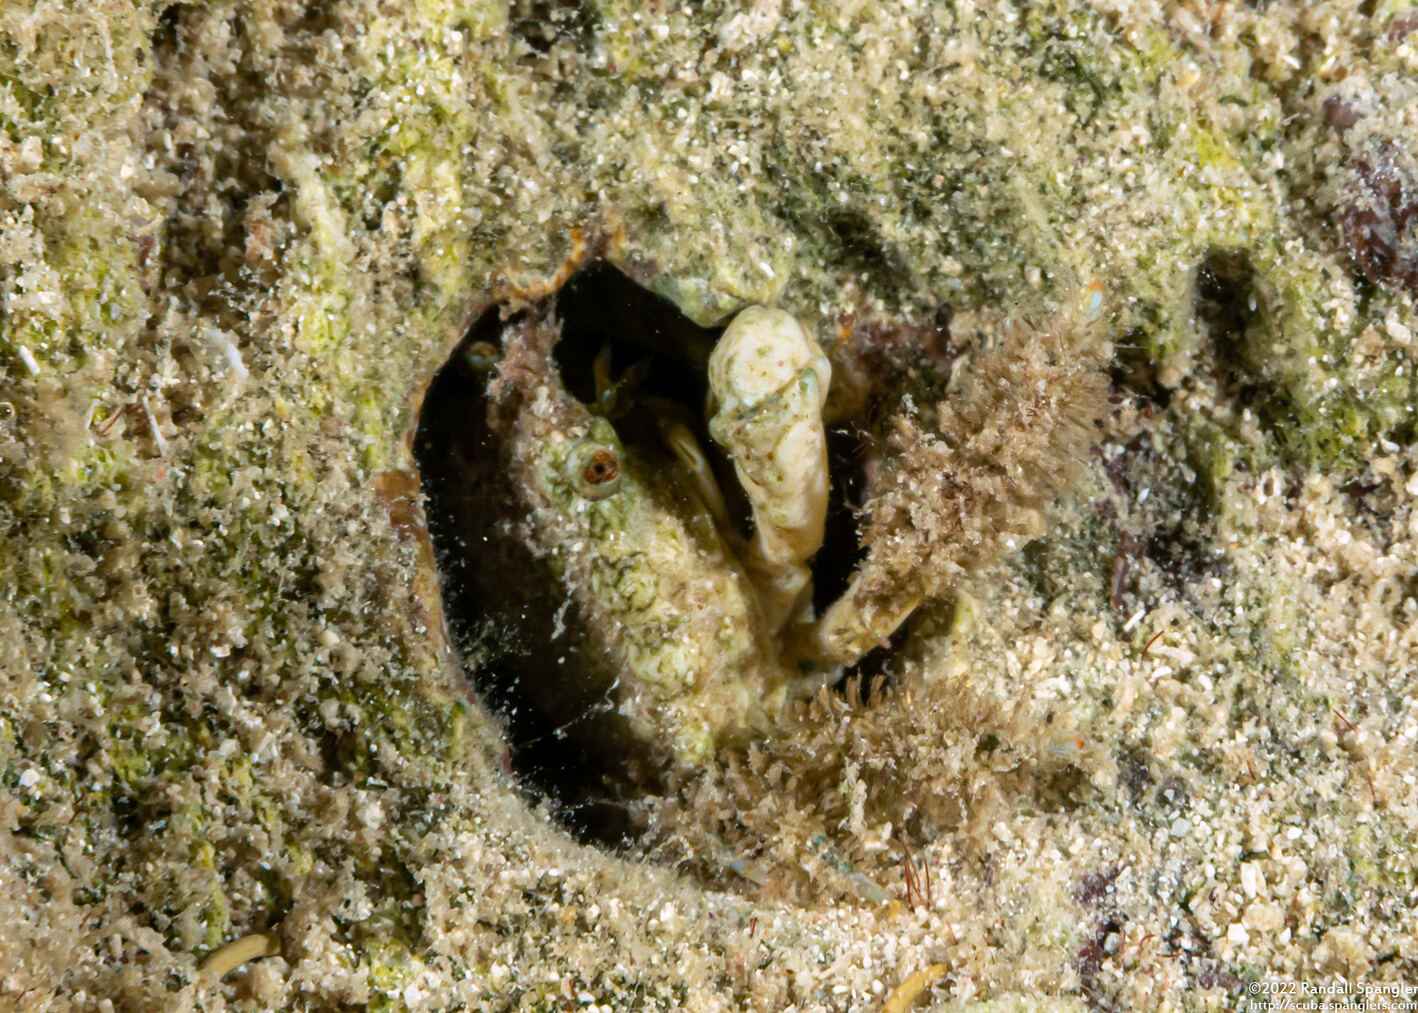 Mithraculus sculptus (Green Clinging Crab)